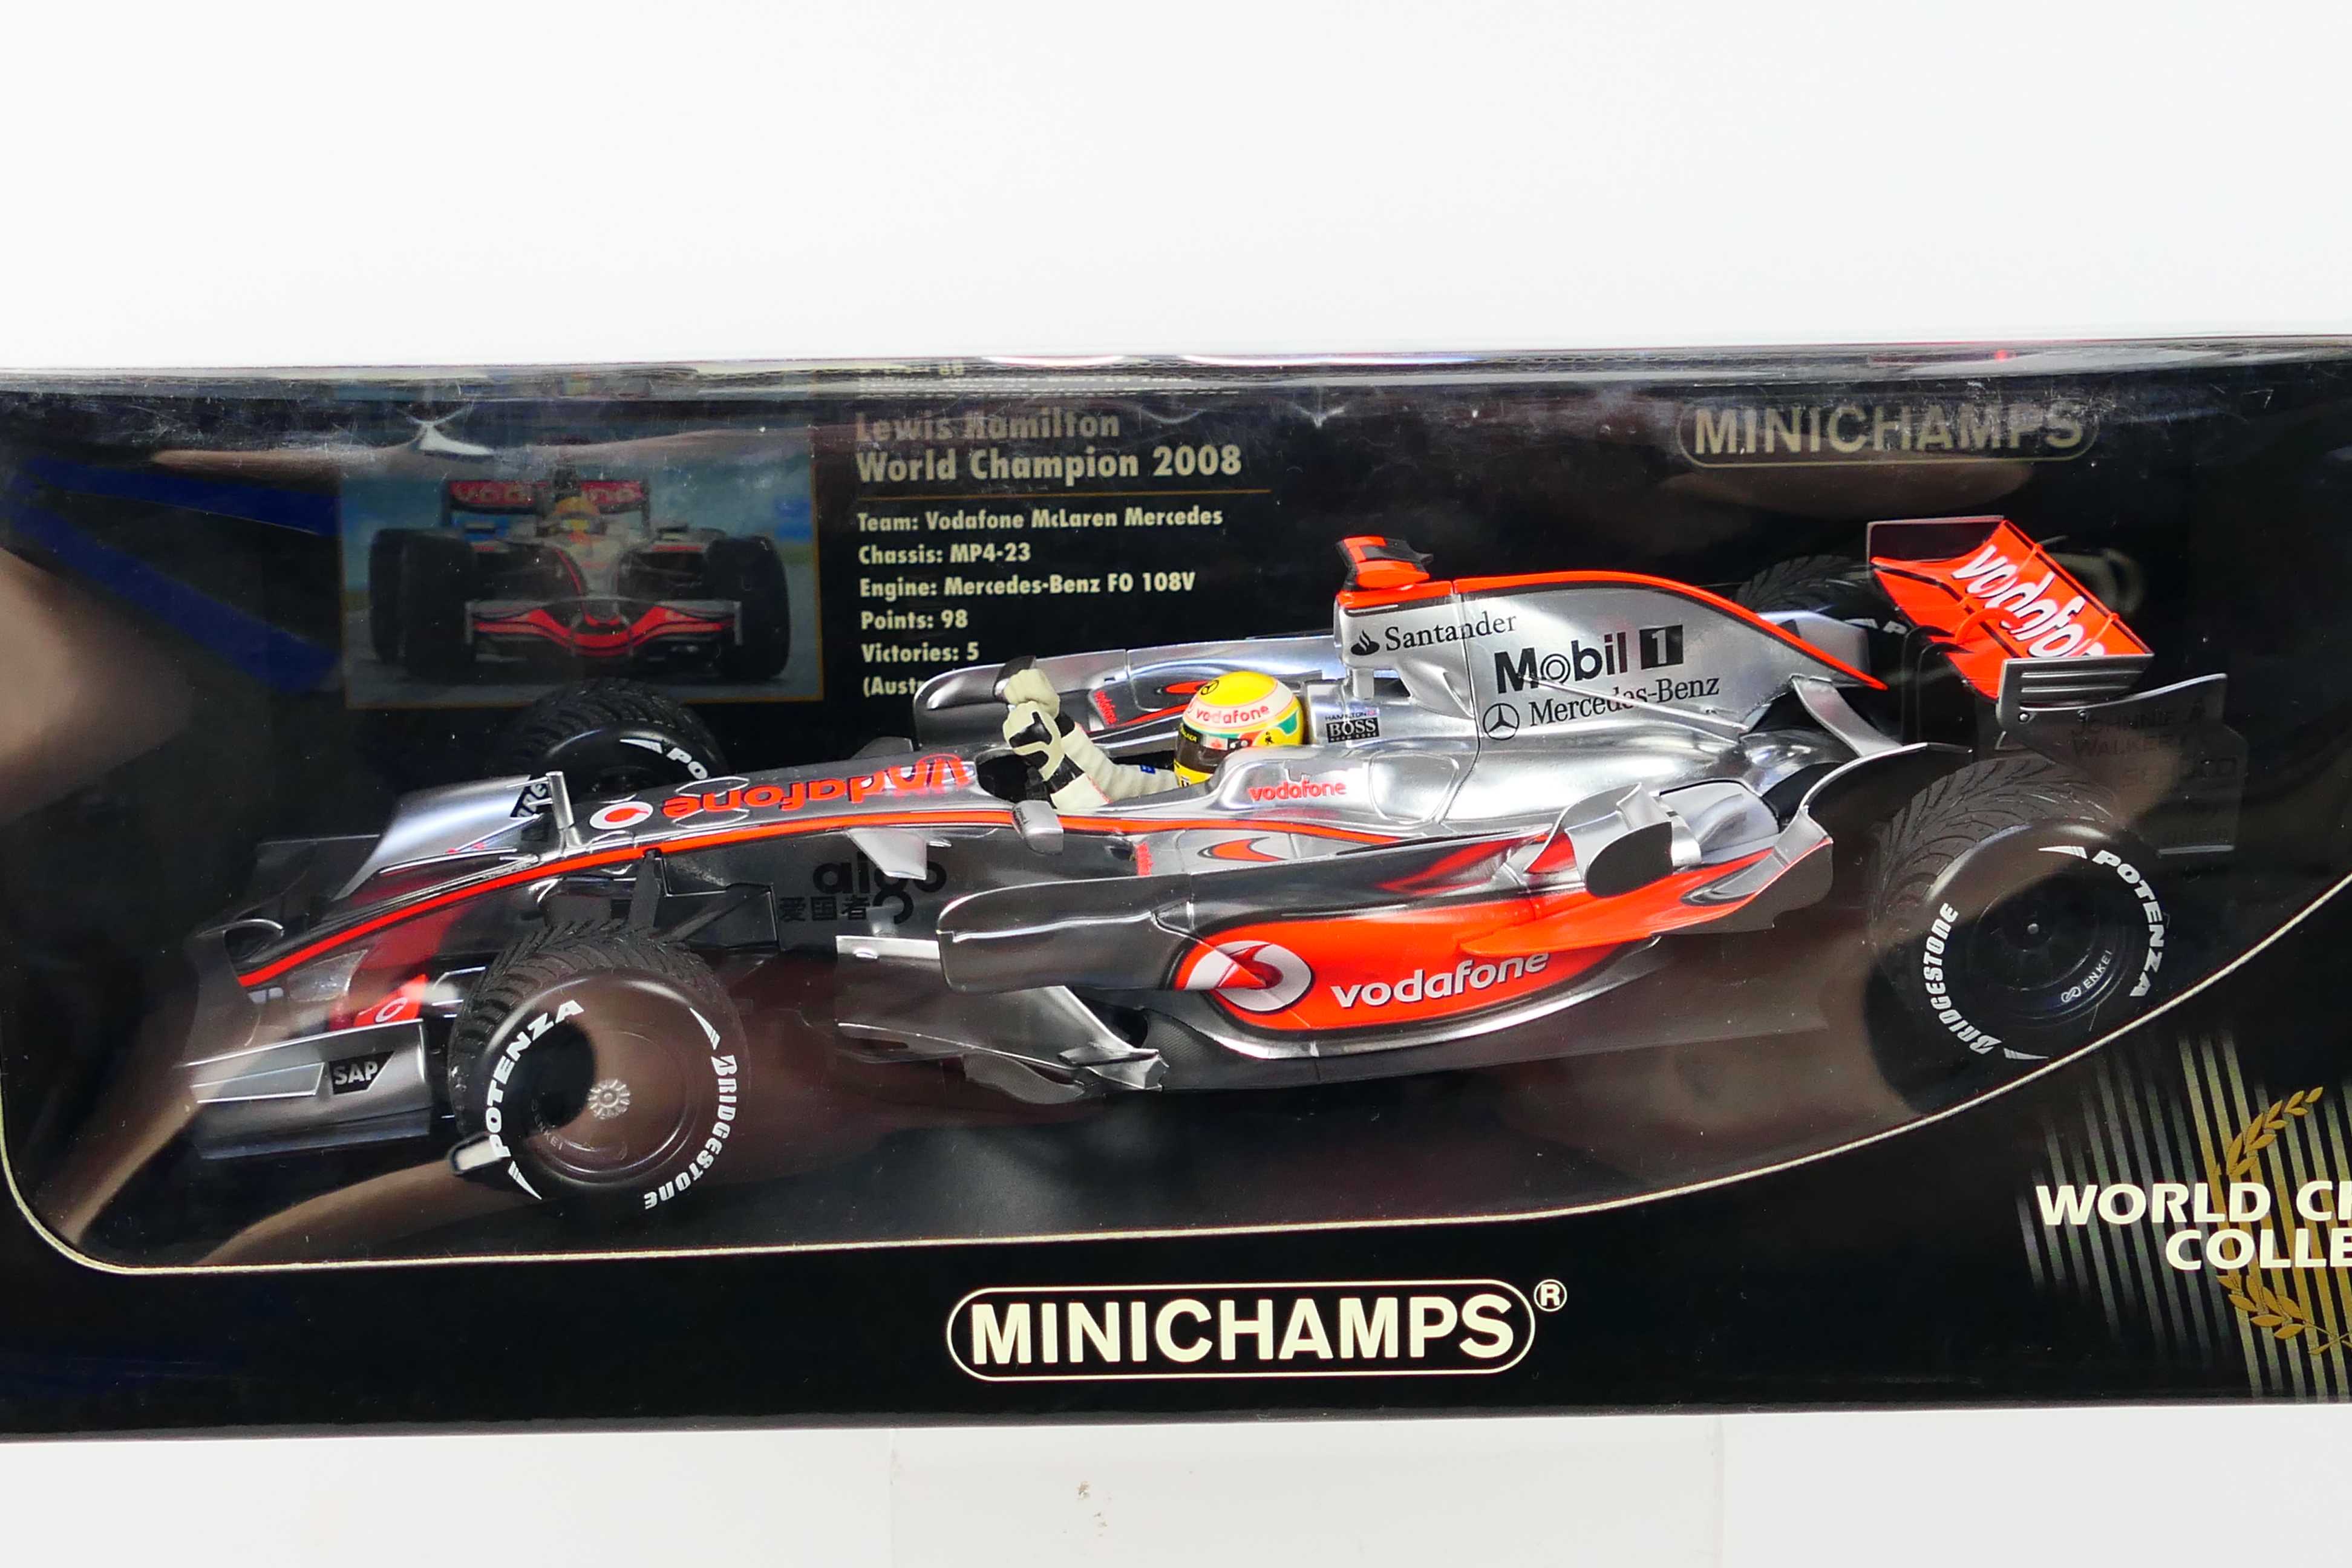 Minichamps - A boxed 1:18 scale Vodafone McLaren Mercedes MP4-23 Lewis Hamilton World Champion 2008 - Image 2 of 3